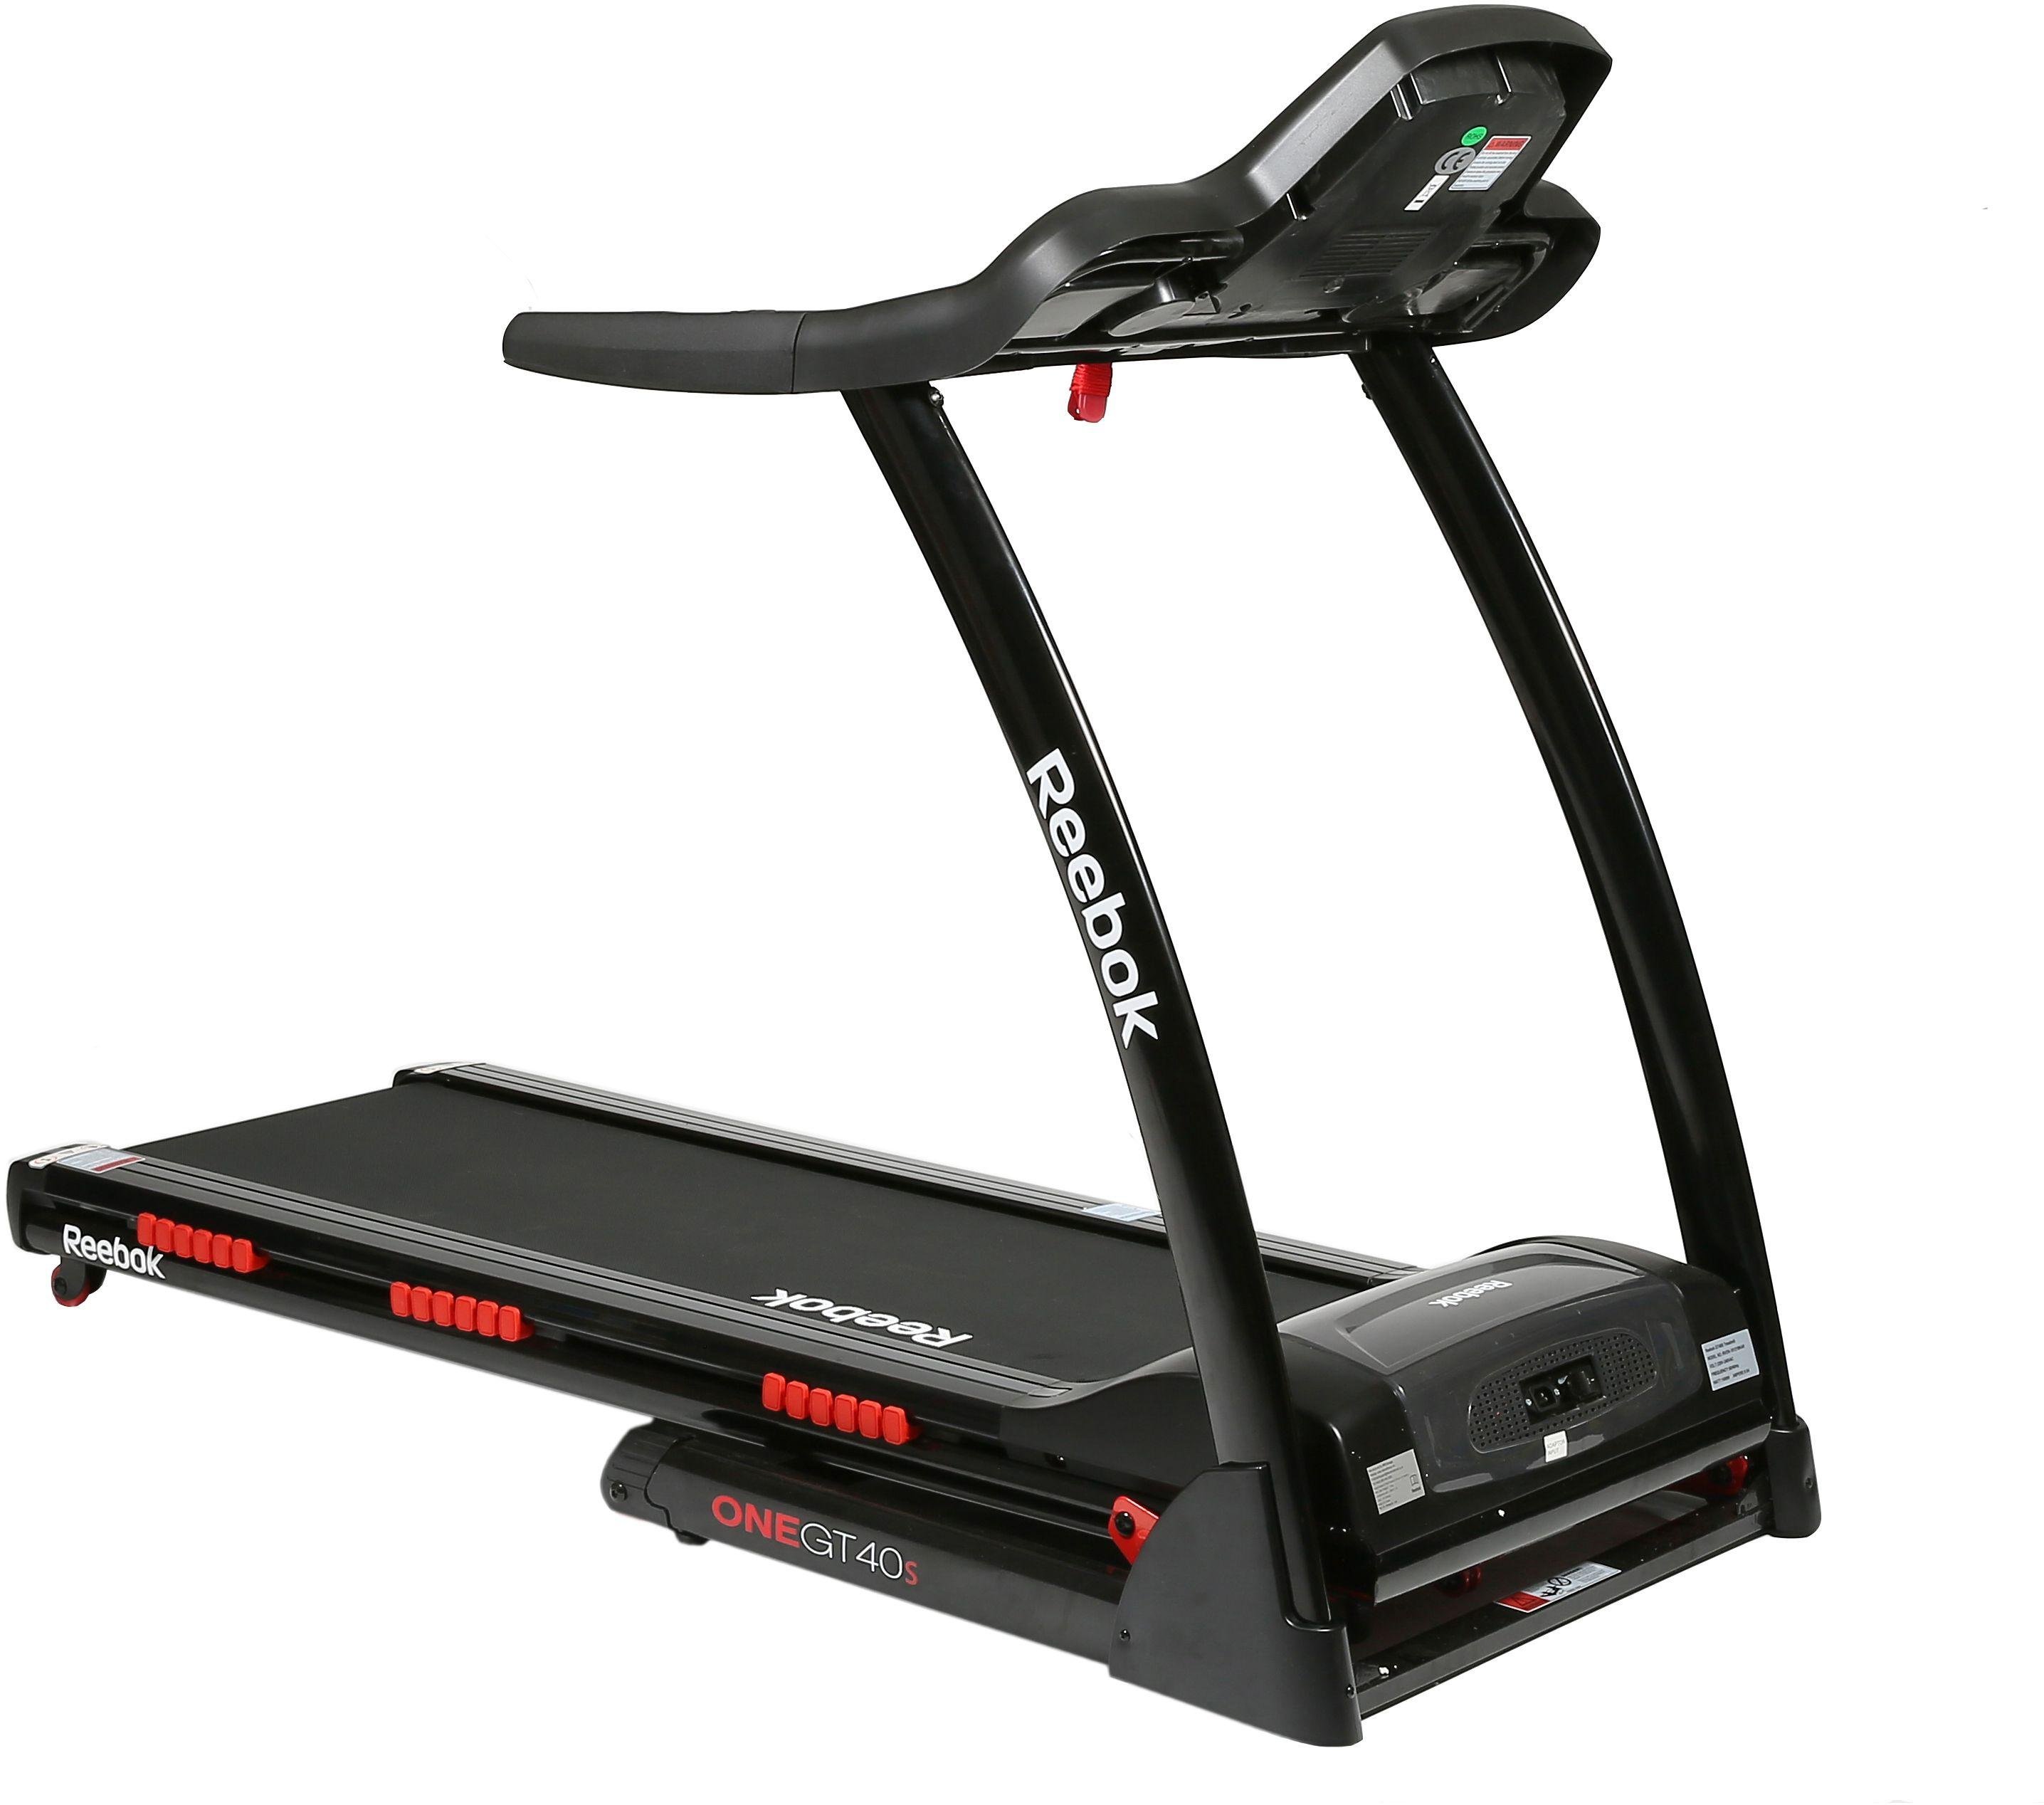 reebok one gt40s treadmill assembly